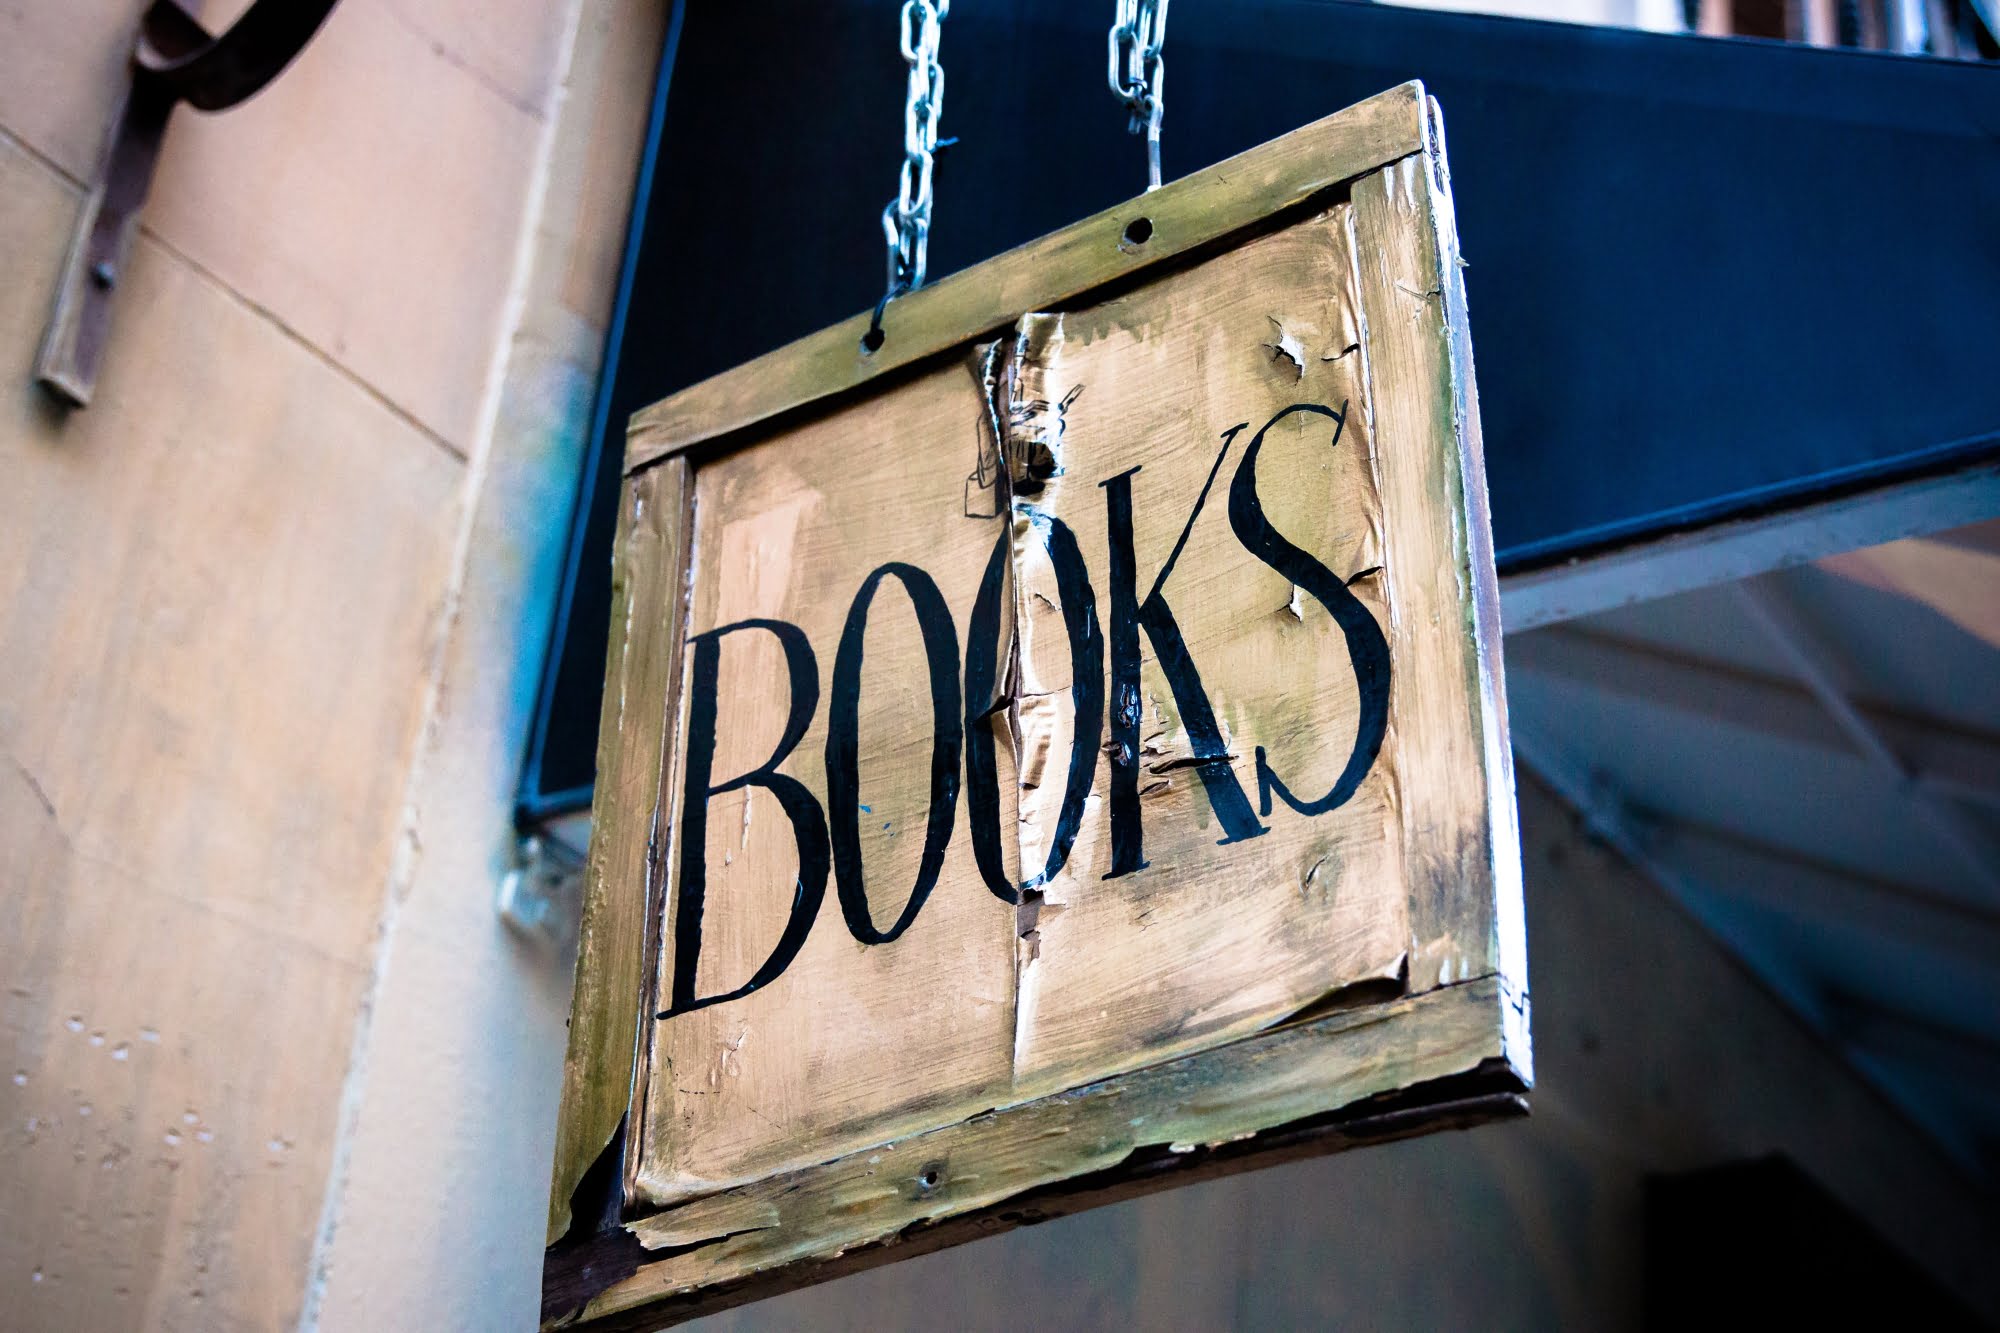 "Books" sign